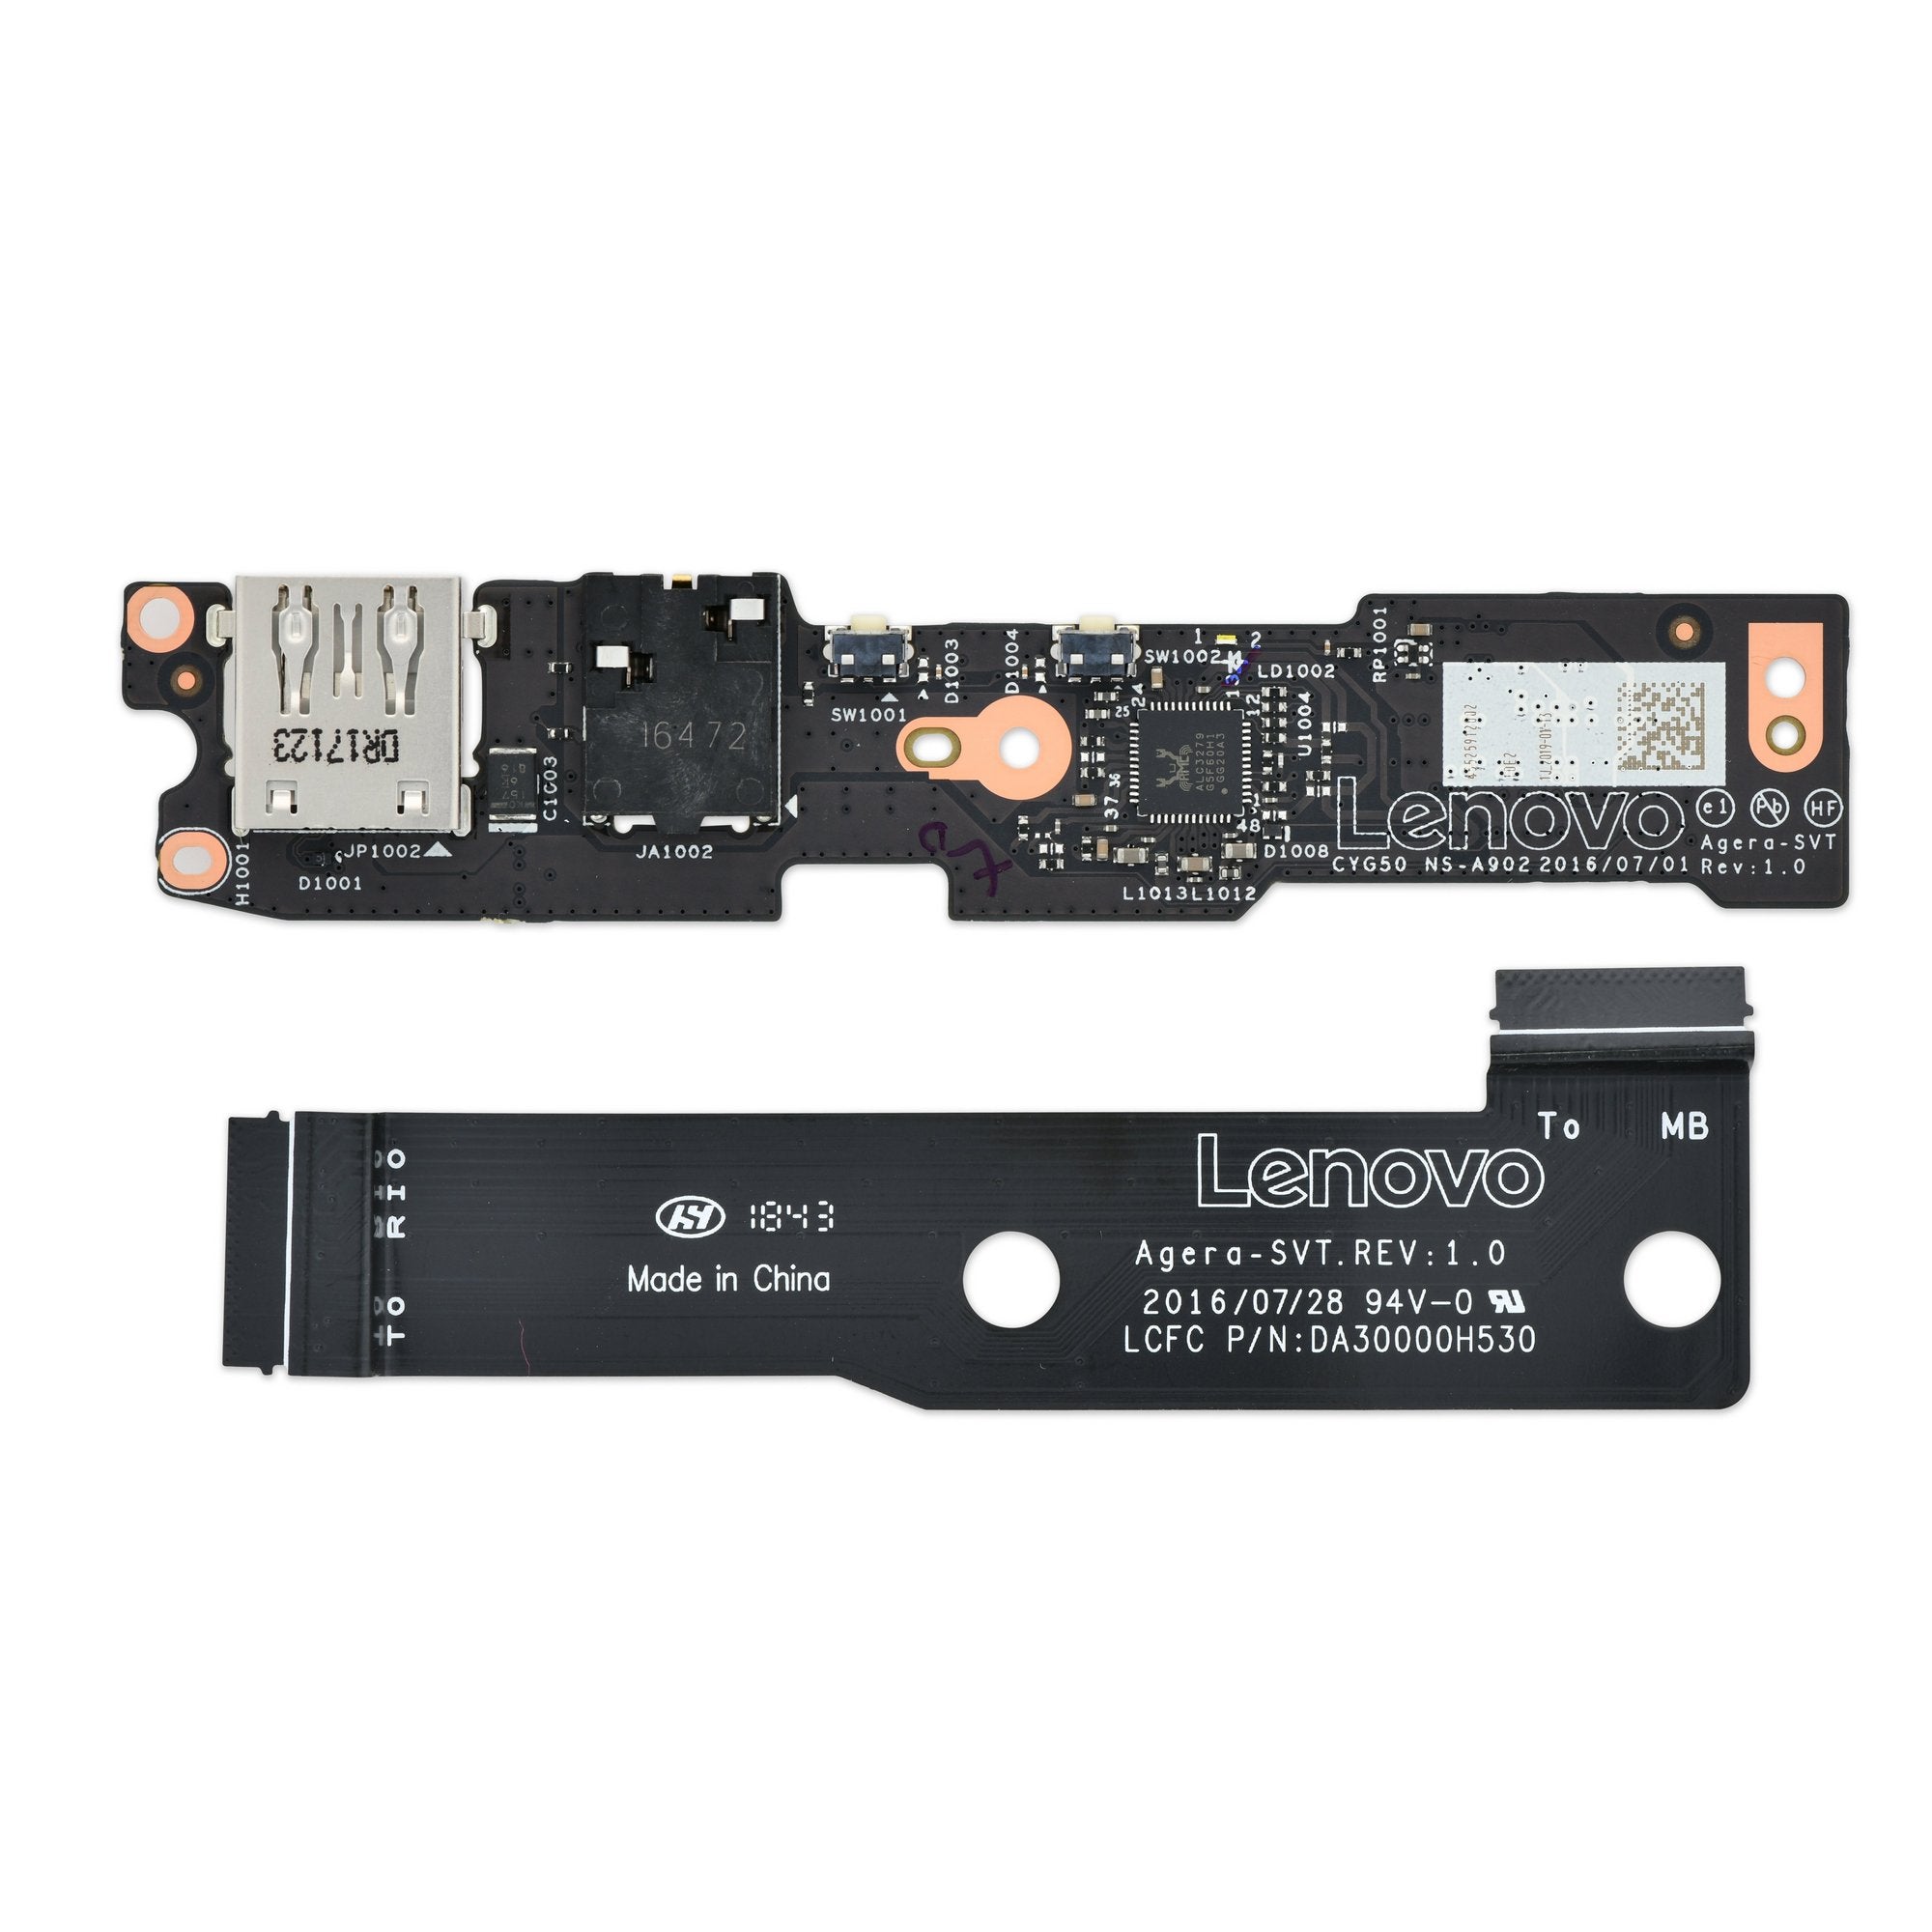 Lenovo Yoga 910 (13") USB Audio Power Board New